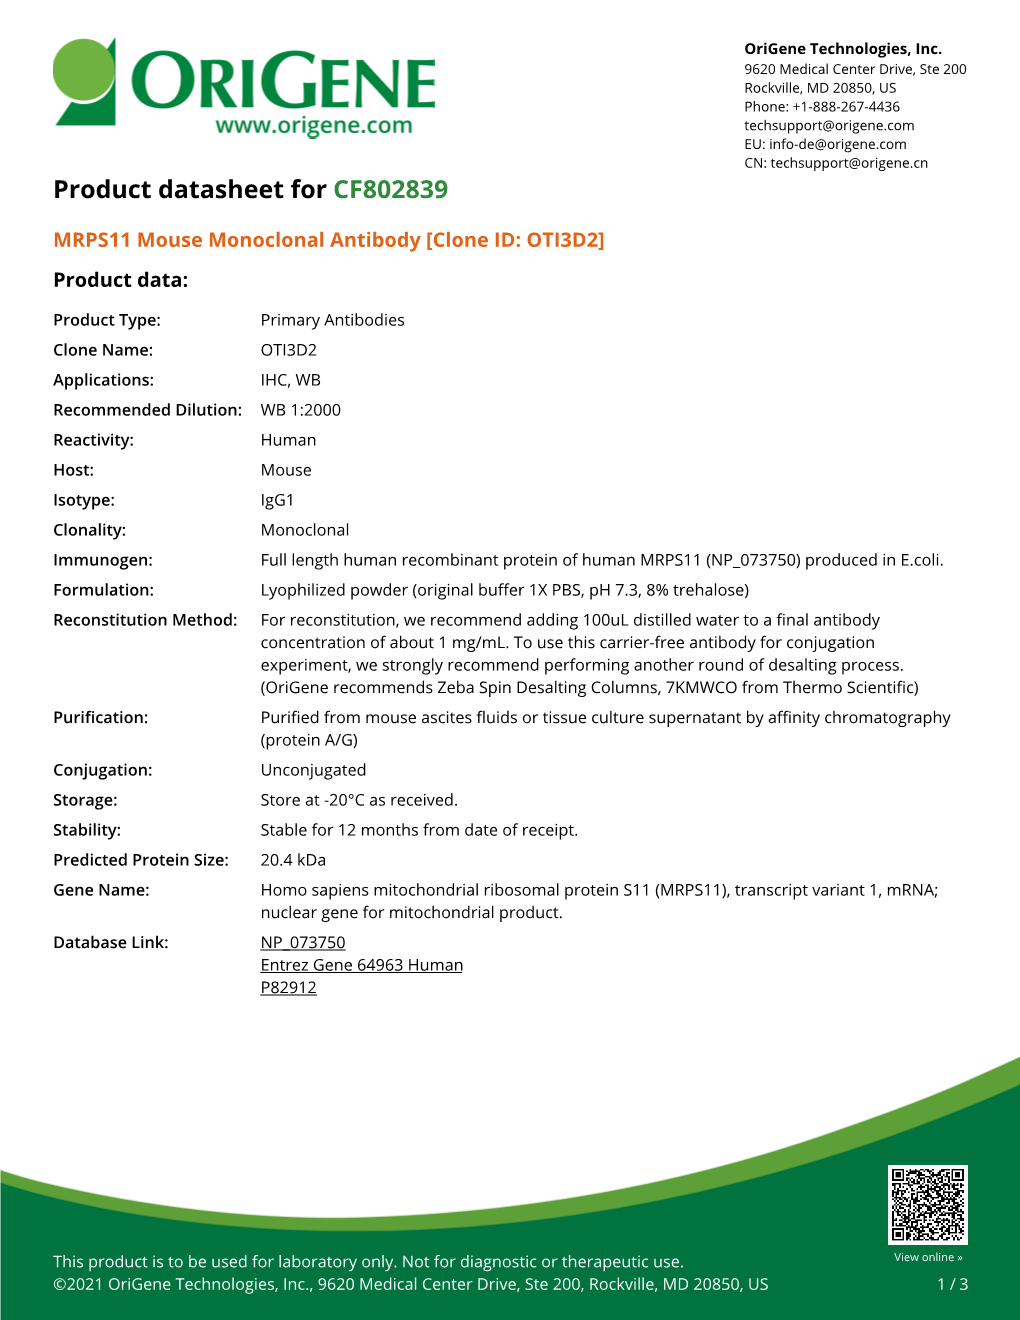 MRPS11 Mouse Monoclonal Antibody [Clone ID: OTI3D2] Product Data